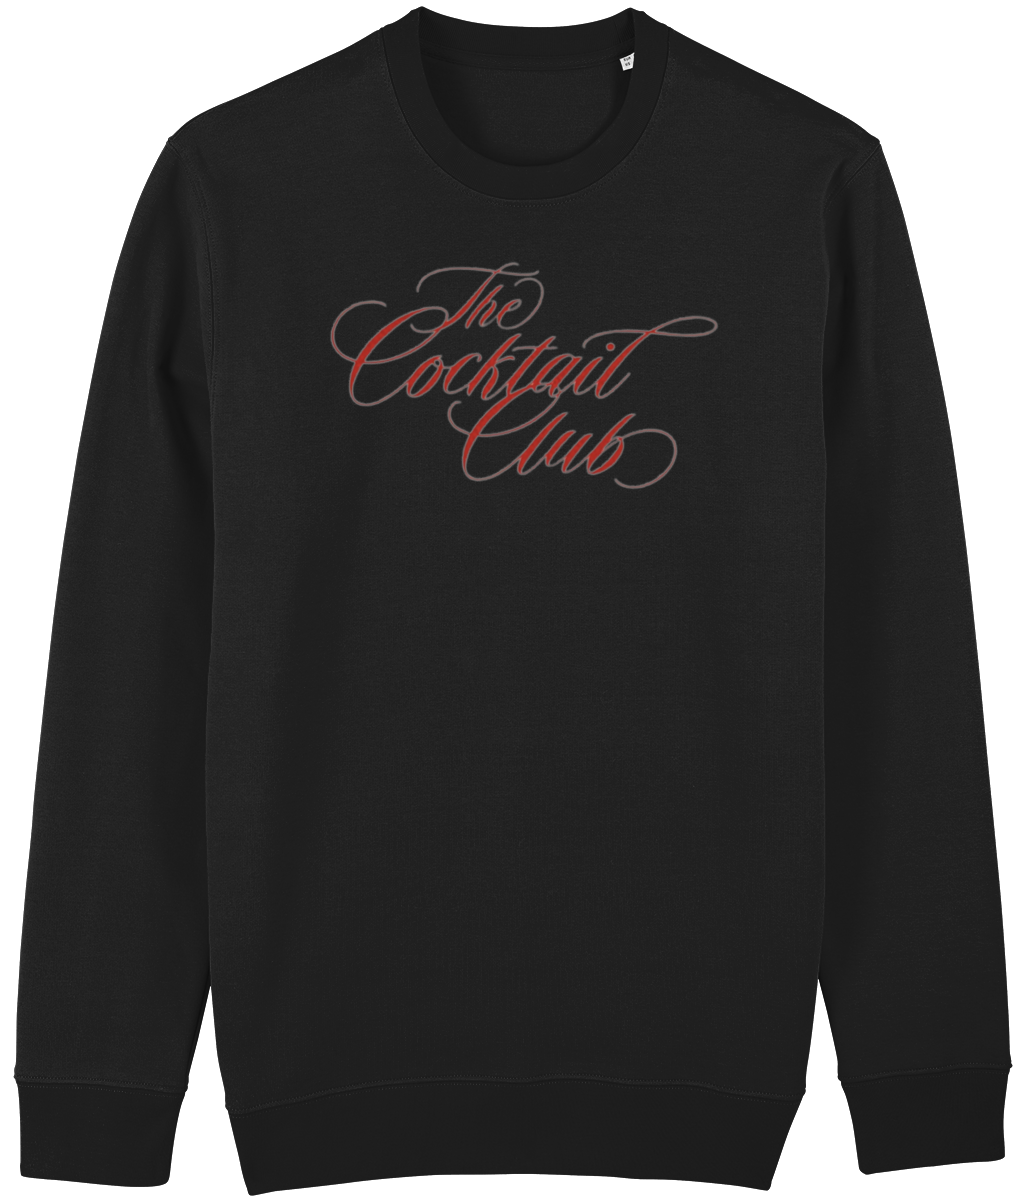 THE COCKTAIL CLUB SWEATSHIRT